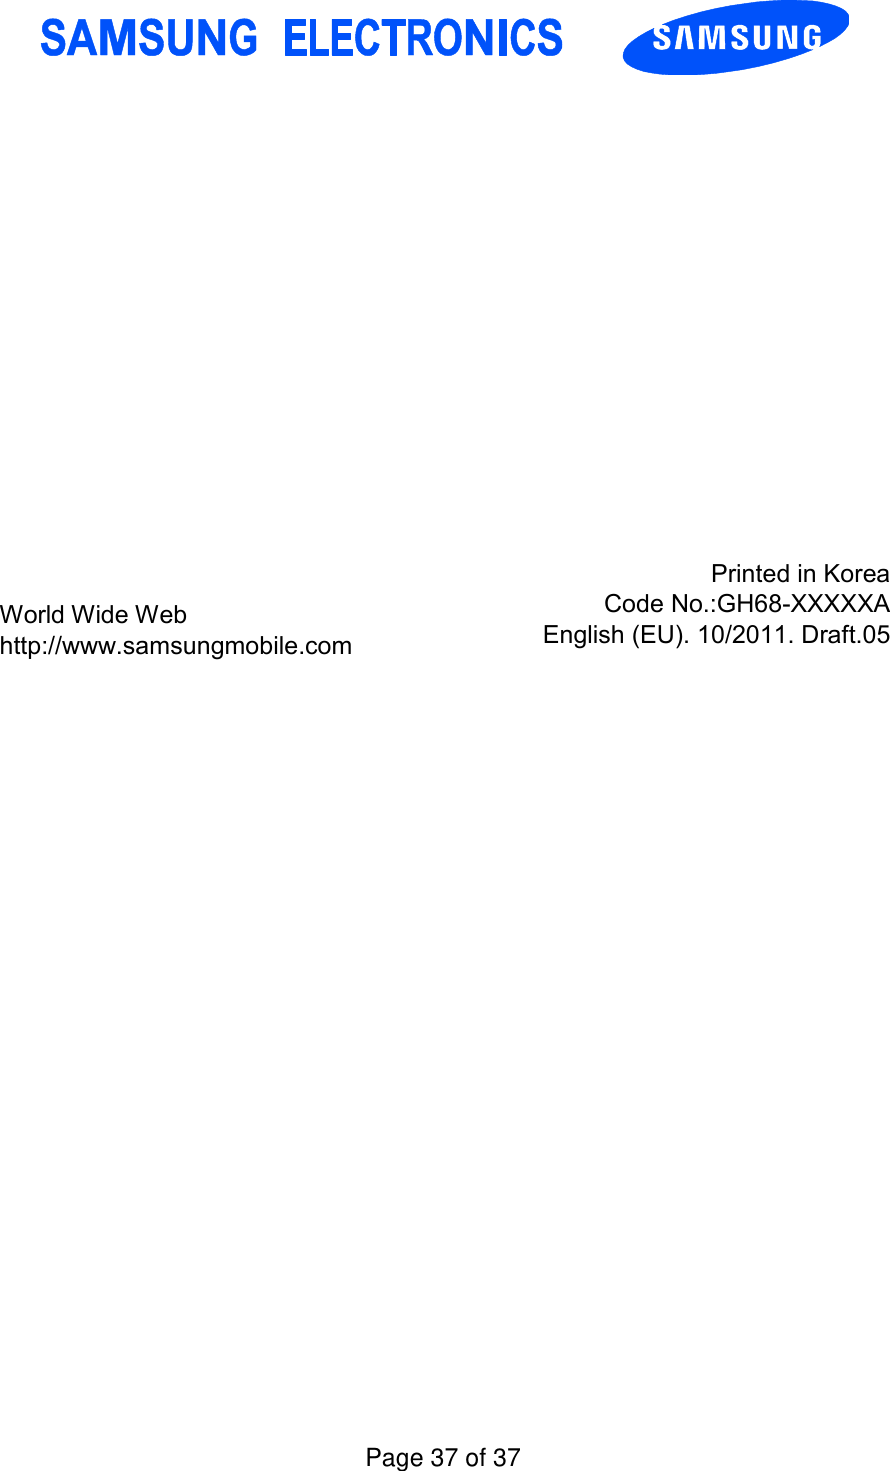     World Wide Web http://www.samsungmobile.com Printed in Korea Code No.:GH68-XXXXXA English (EU). 10/2011. Draft.05 Page 37 of 37